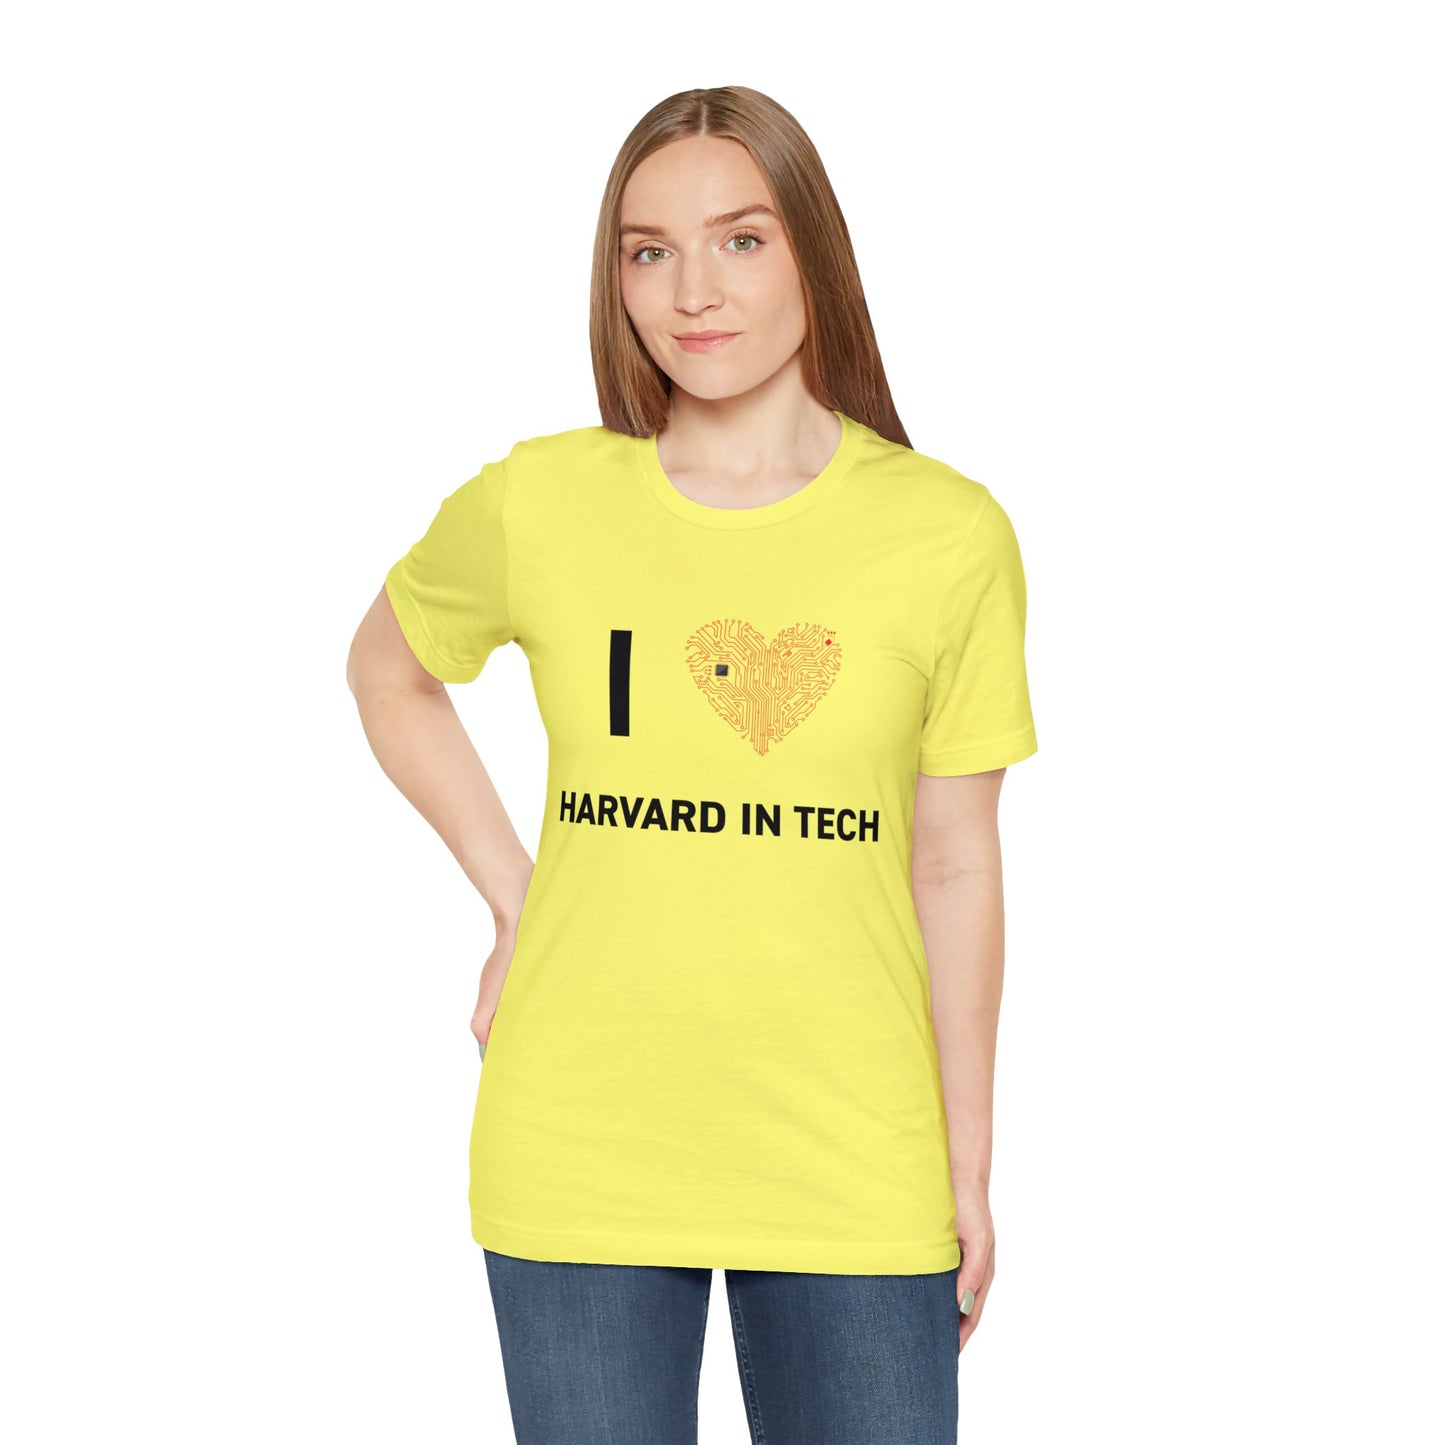 I LUV HIT Unisex T-Shirt